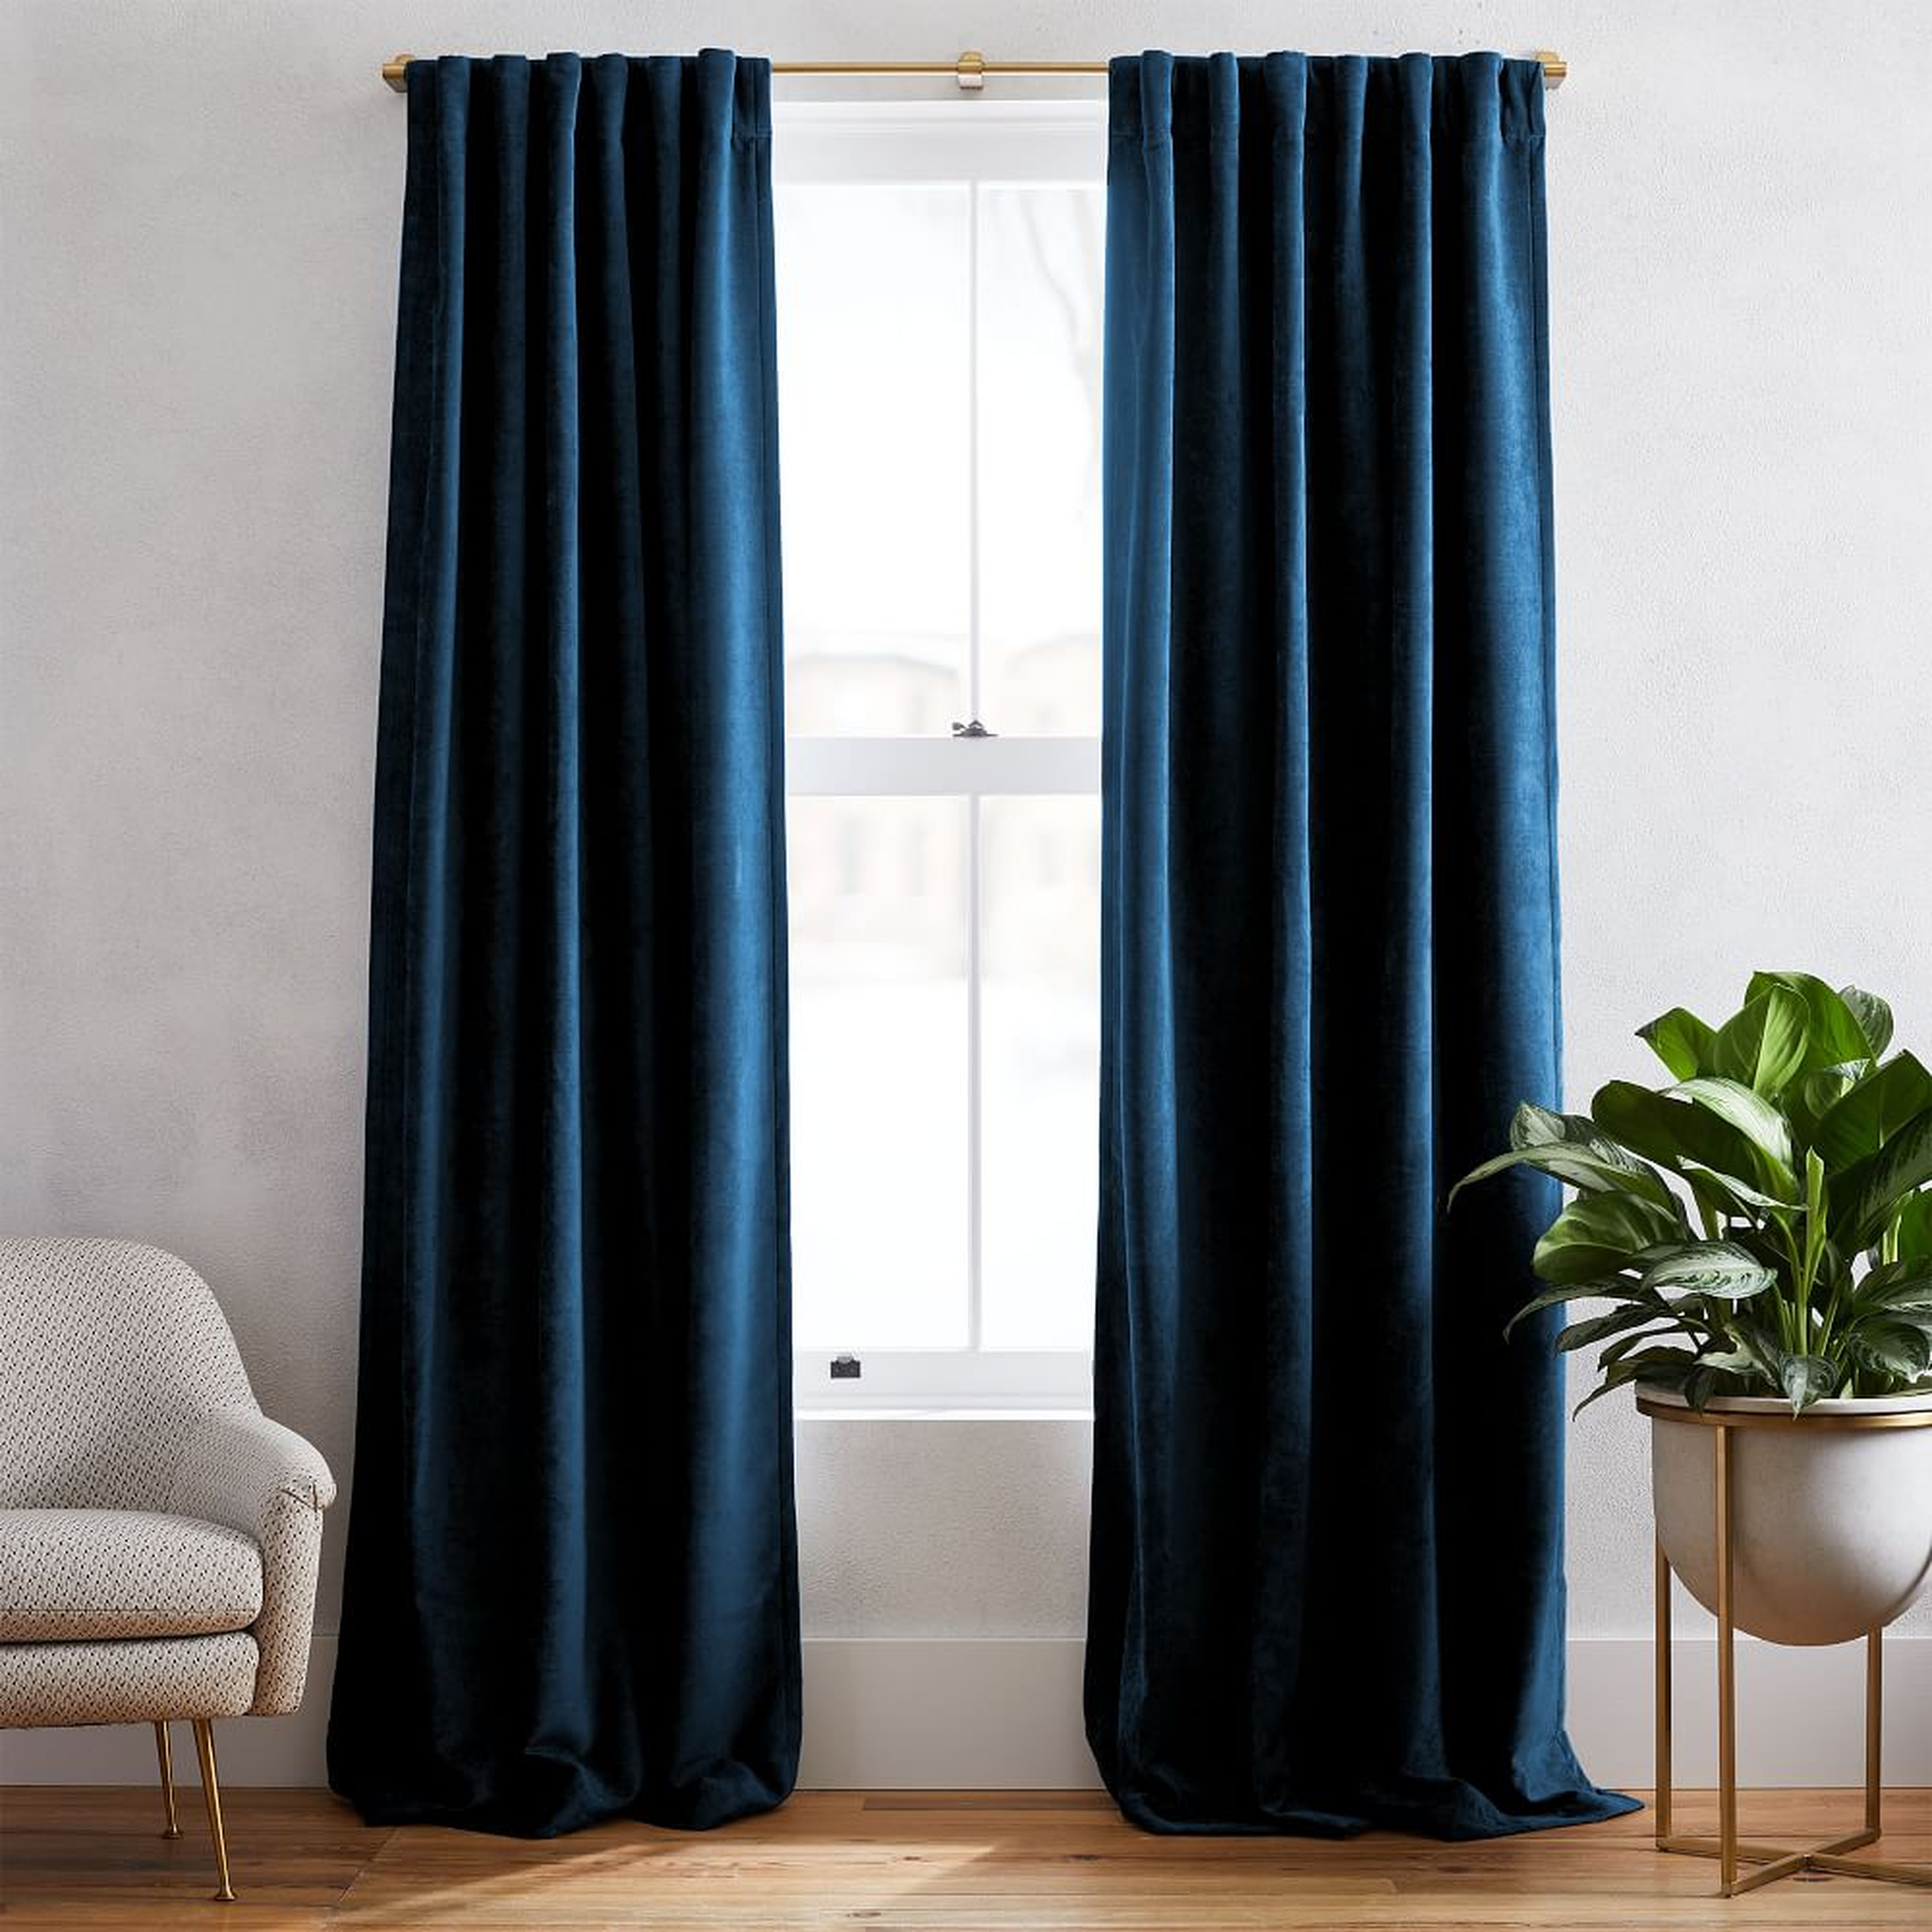 Worn Velvet Curtain with Cotton Lining, Regal Blue, 48"x108" - West Elm